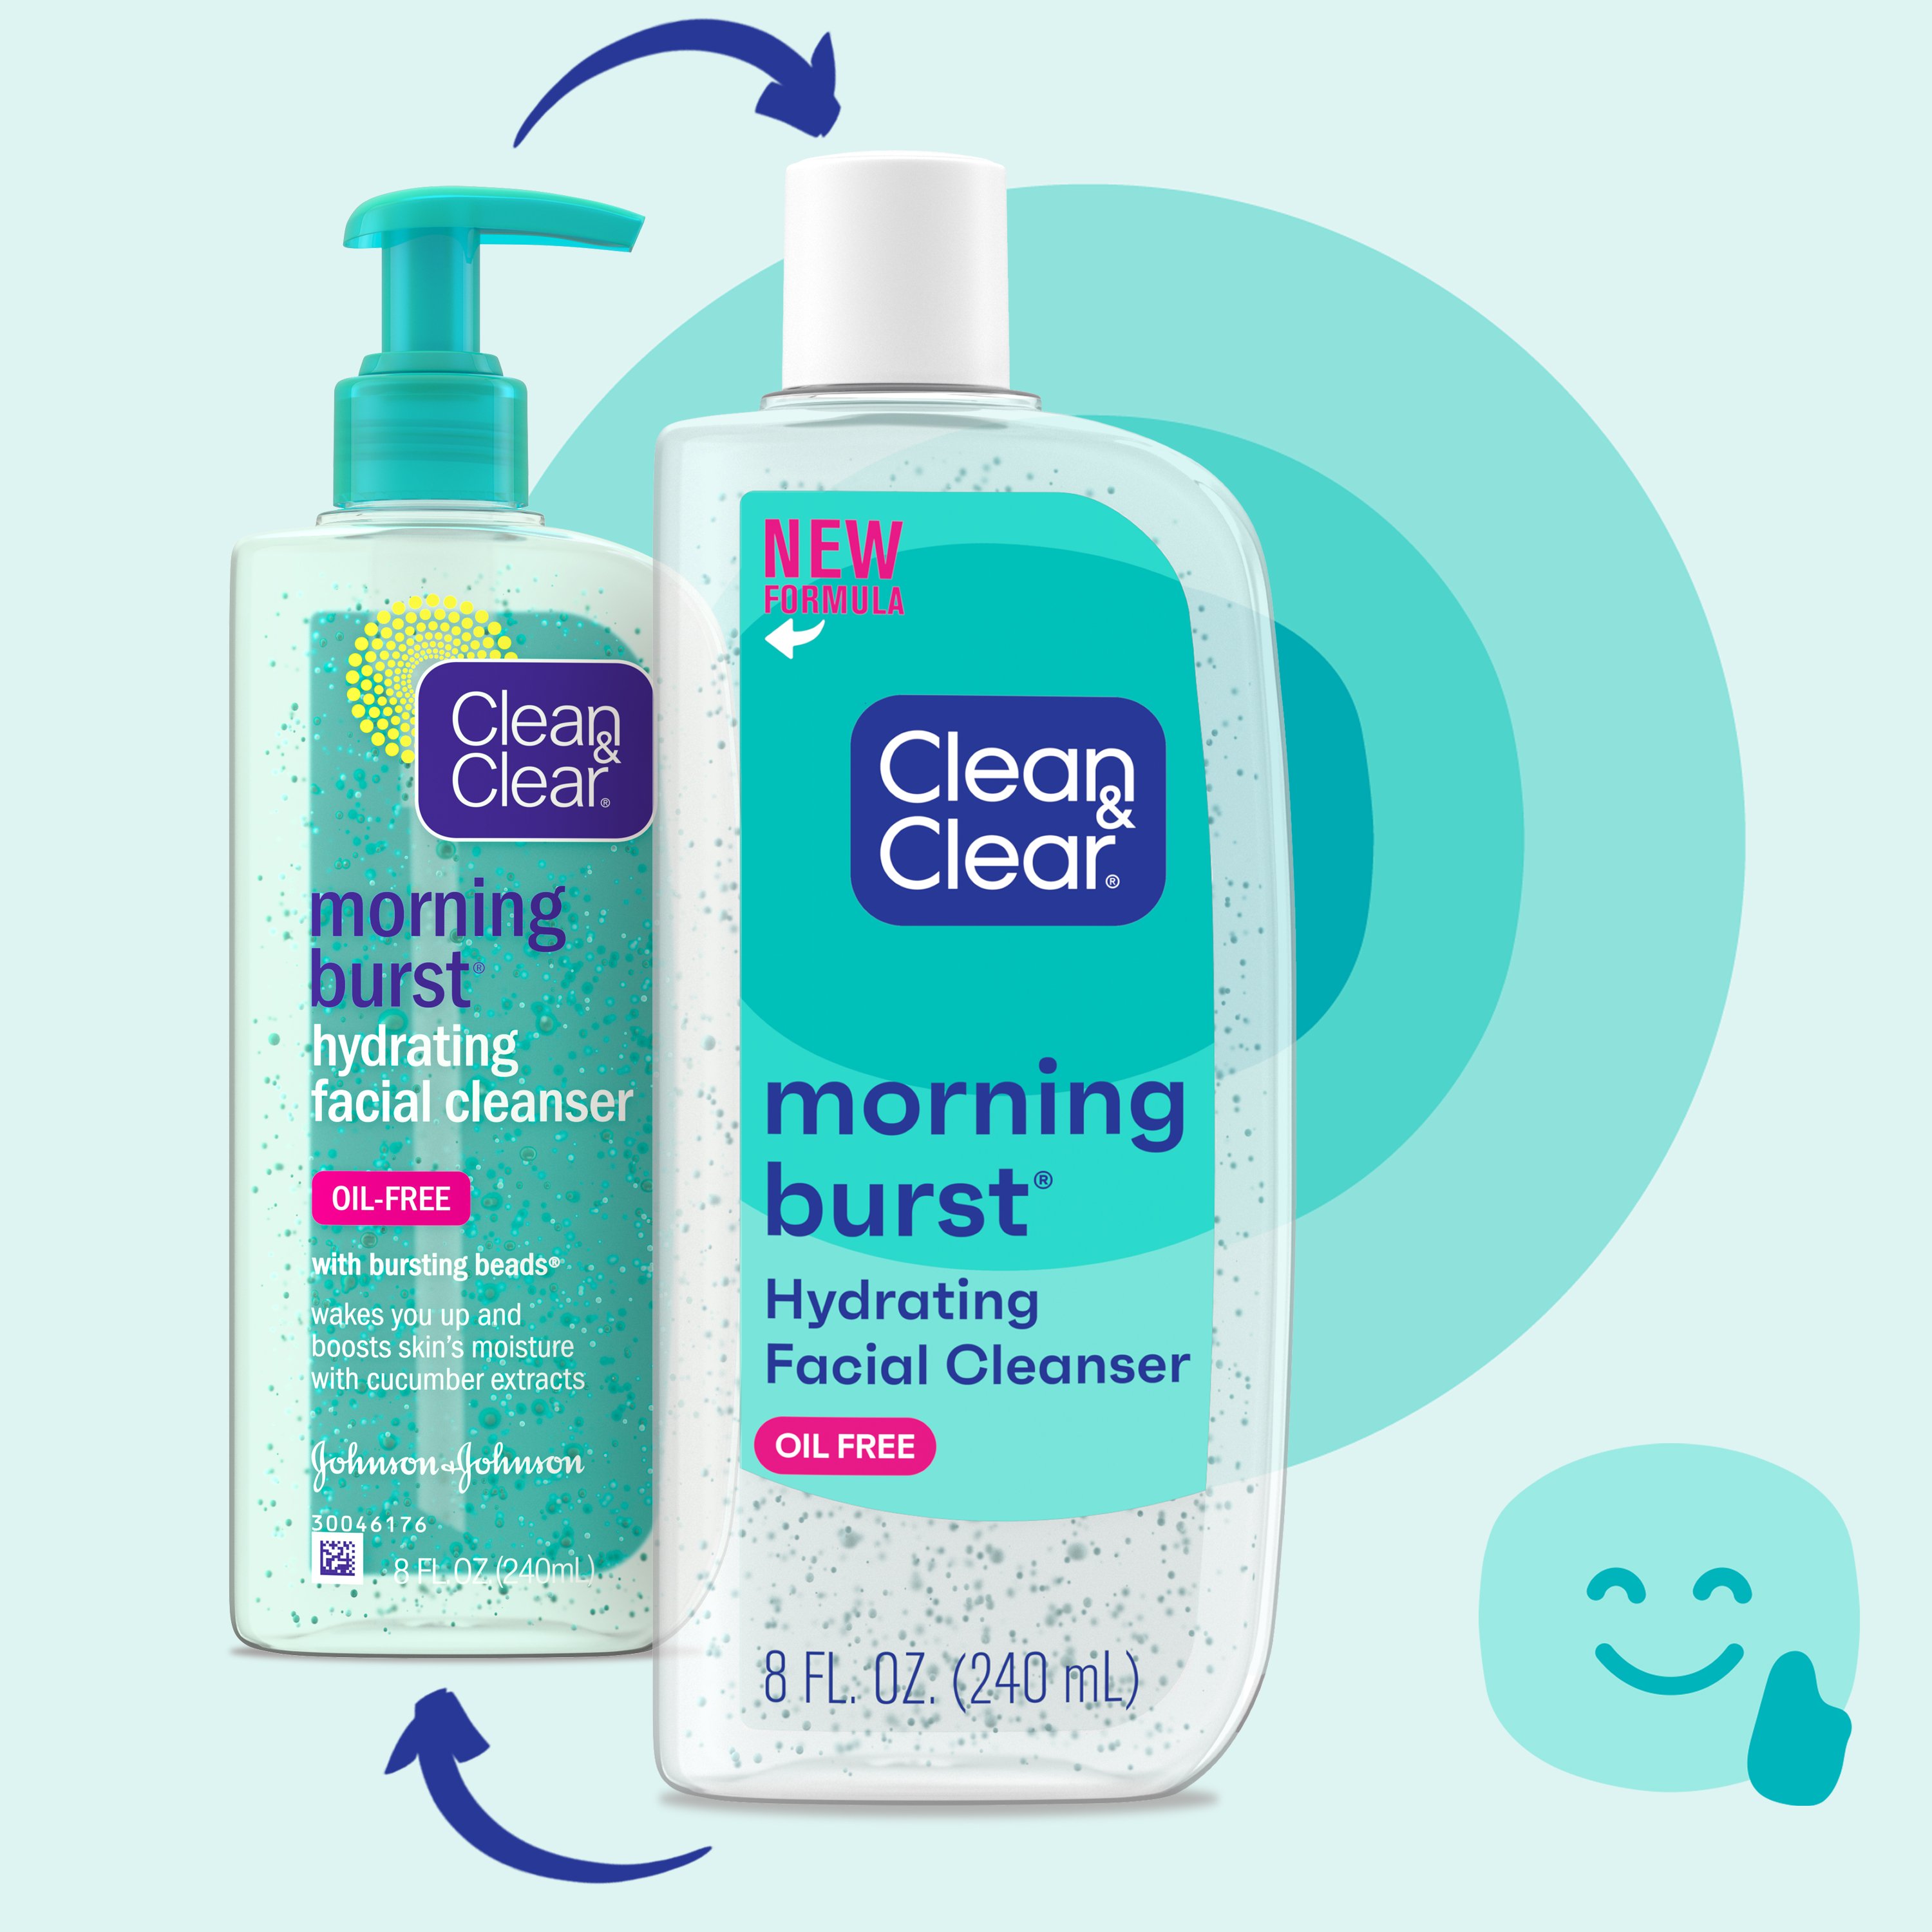 clean and clear morning burst facial scrub